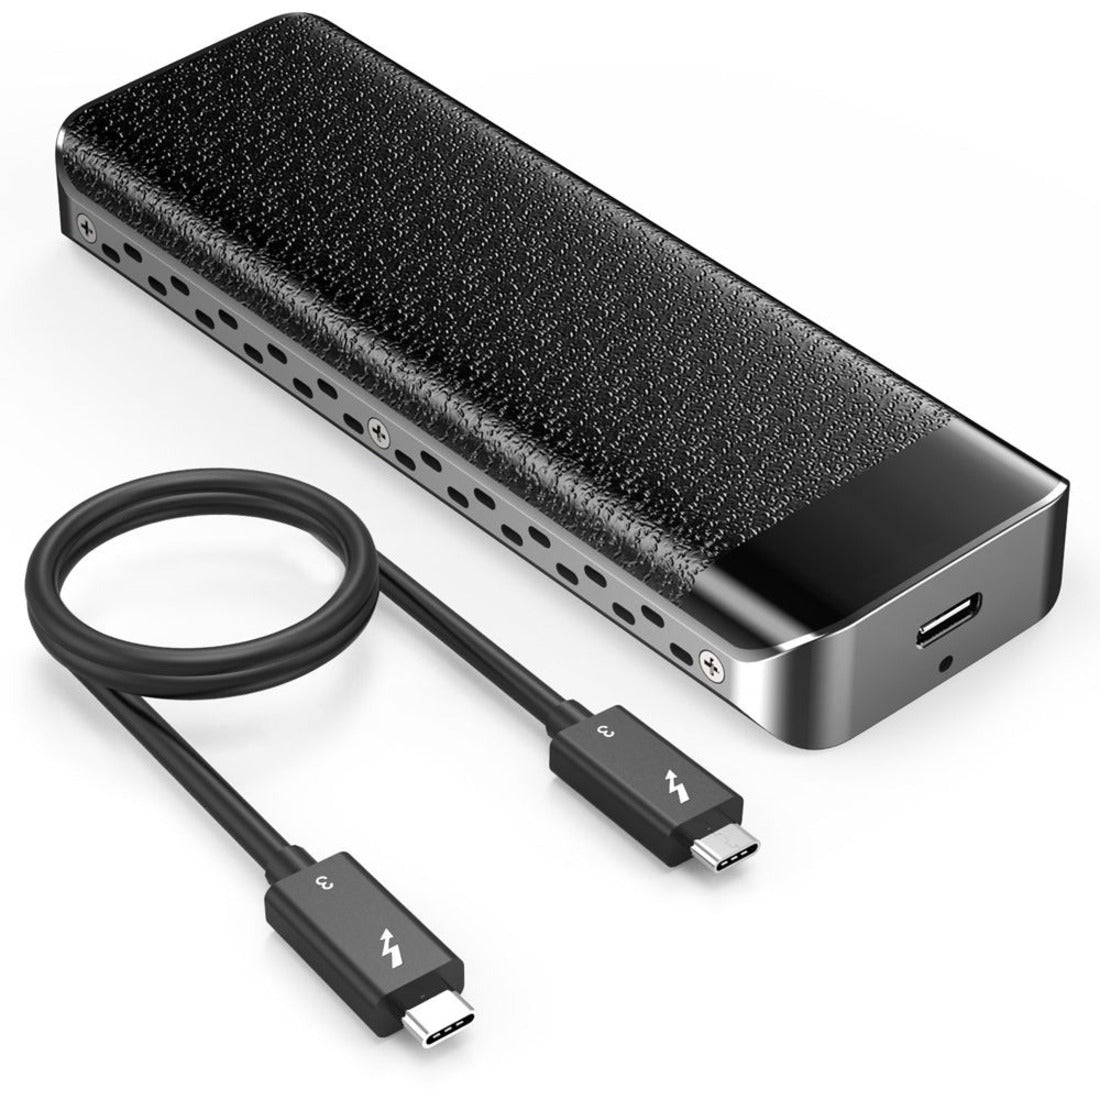 4XEM 4XUTE02 Portable Thunderbolt 3 PCle NVMe SSD Enclosure, Black, Gray - Portable, Thunderbolt 3 Host Interface